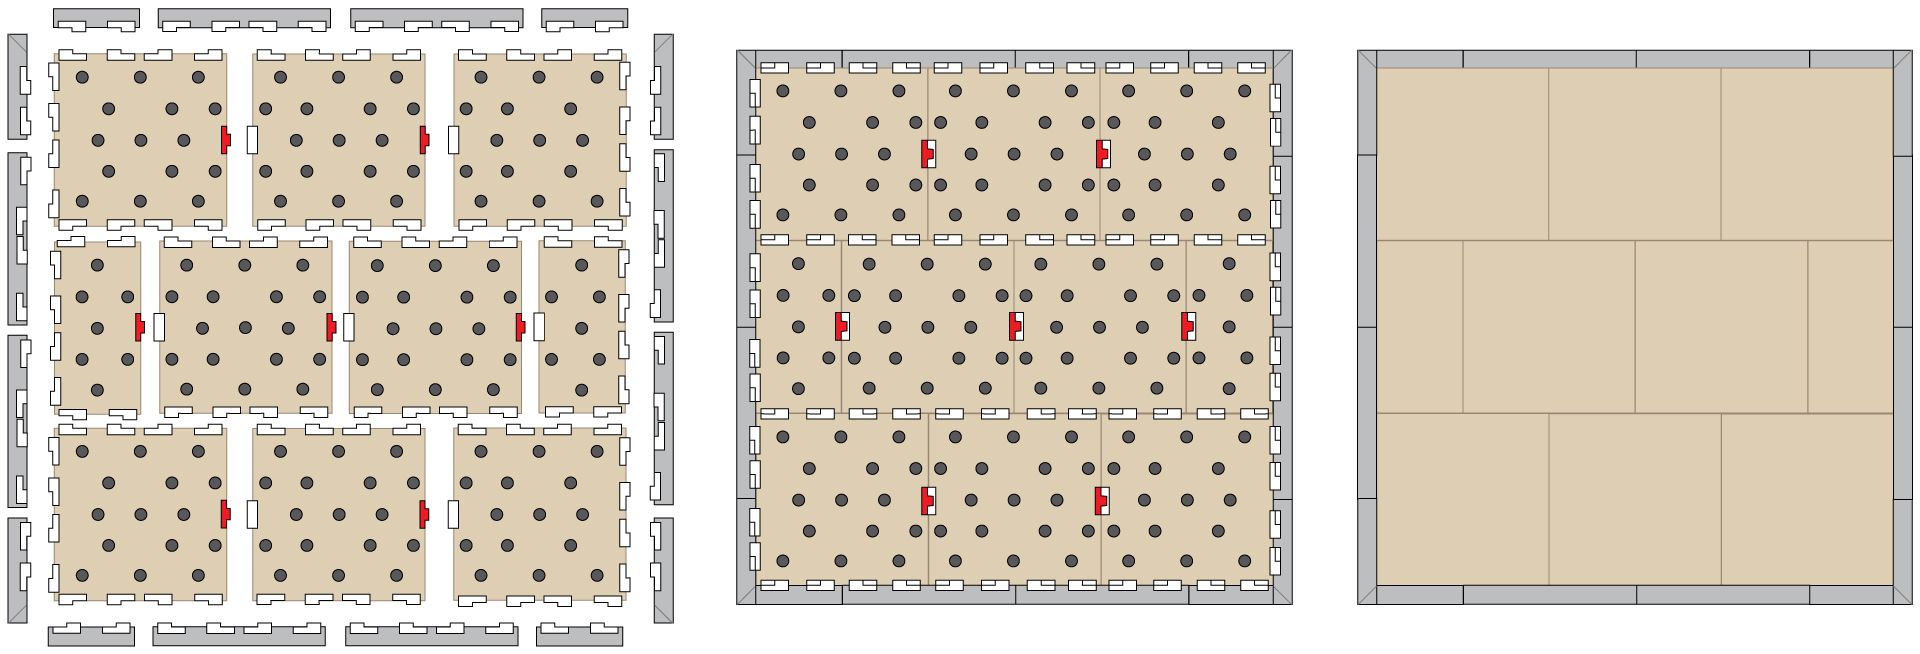 Car Showroom Floor Layout Plan